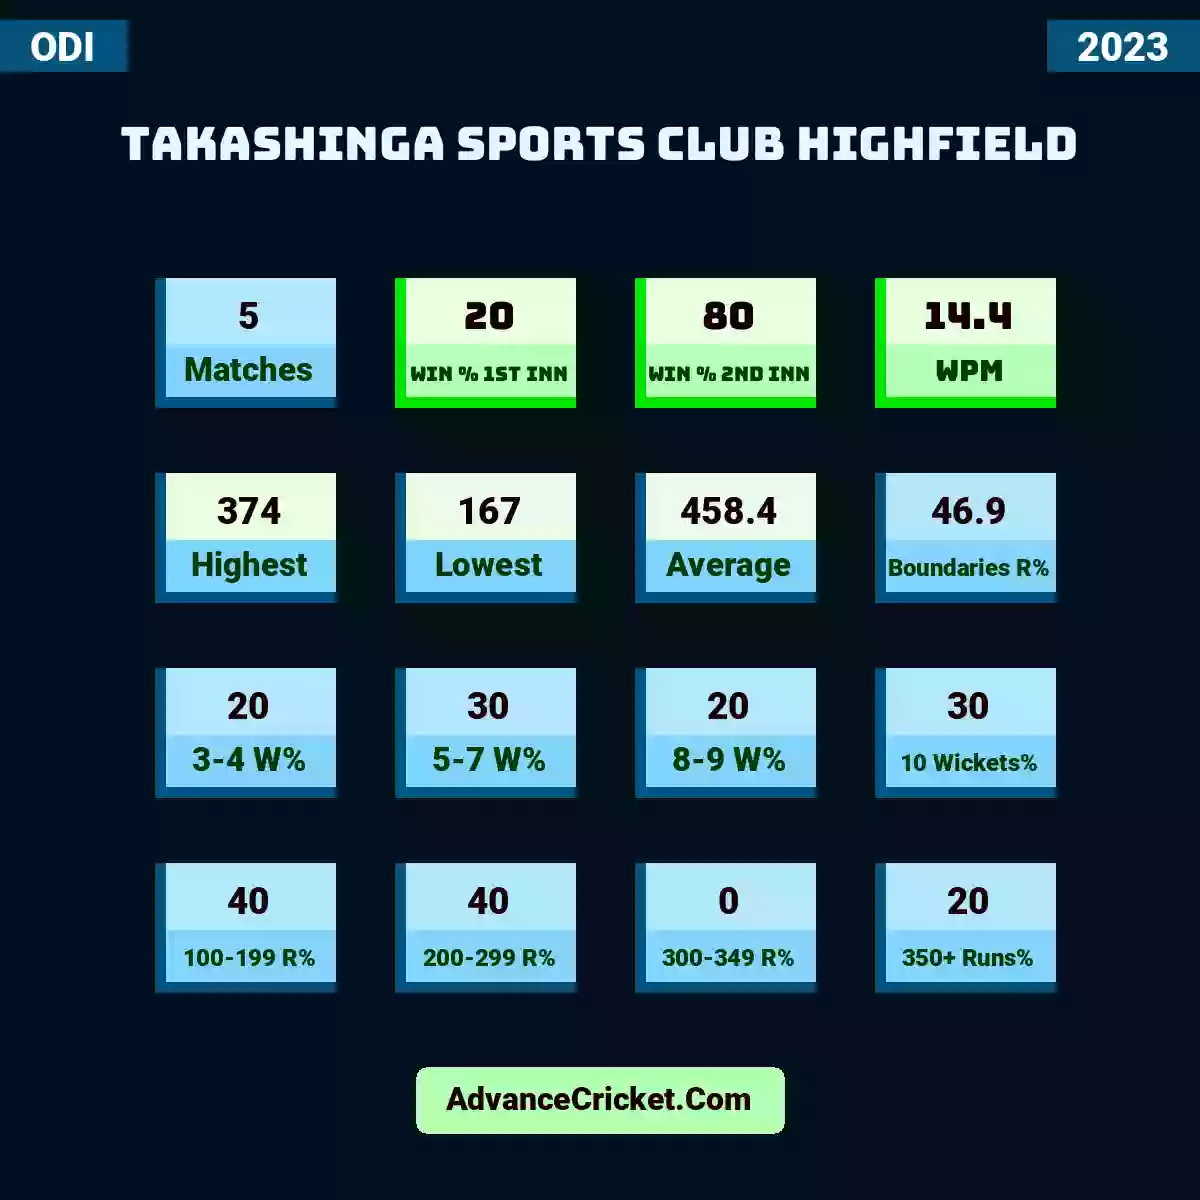 Image showing Takashinga Sports Club Highfield with Matches: 5, Win % 1st Inn: 20, Win % 2nd Inn: 80, WPM: 14.4, Highest: 374, Lowest: 167, Average: 458.4, Boundaries R%: 46.9, 3-4 W%: 20, 5-7 W%: 30, 8-9 W%: 20, 10 Wickets%: 30, 100-199 R%: 40, 200-299 R%: 40, 300-349 R%: 0, 350+ Runs%: 20.